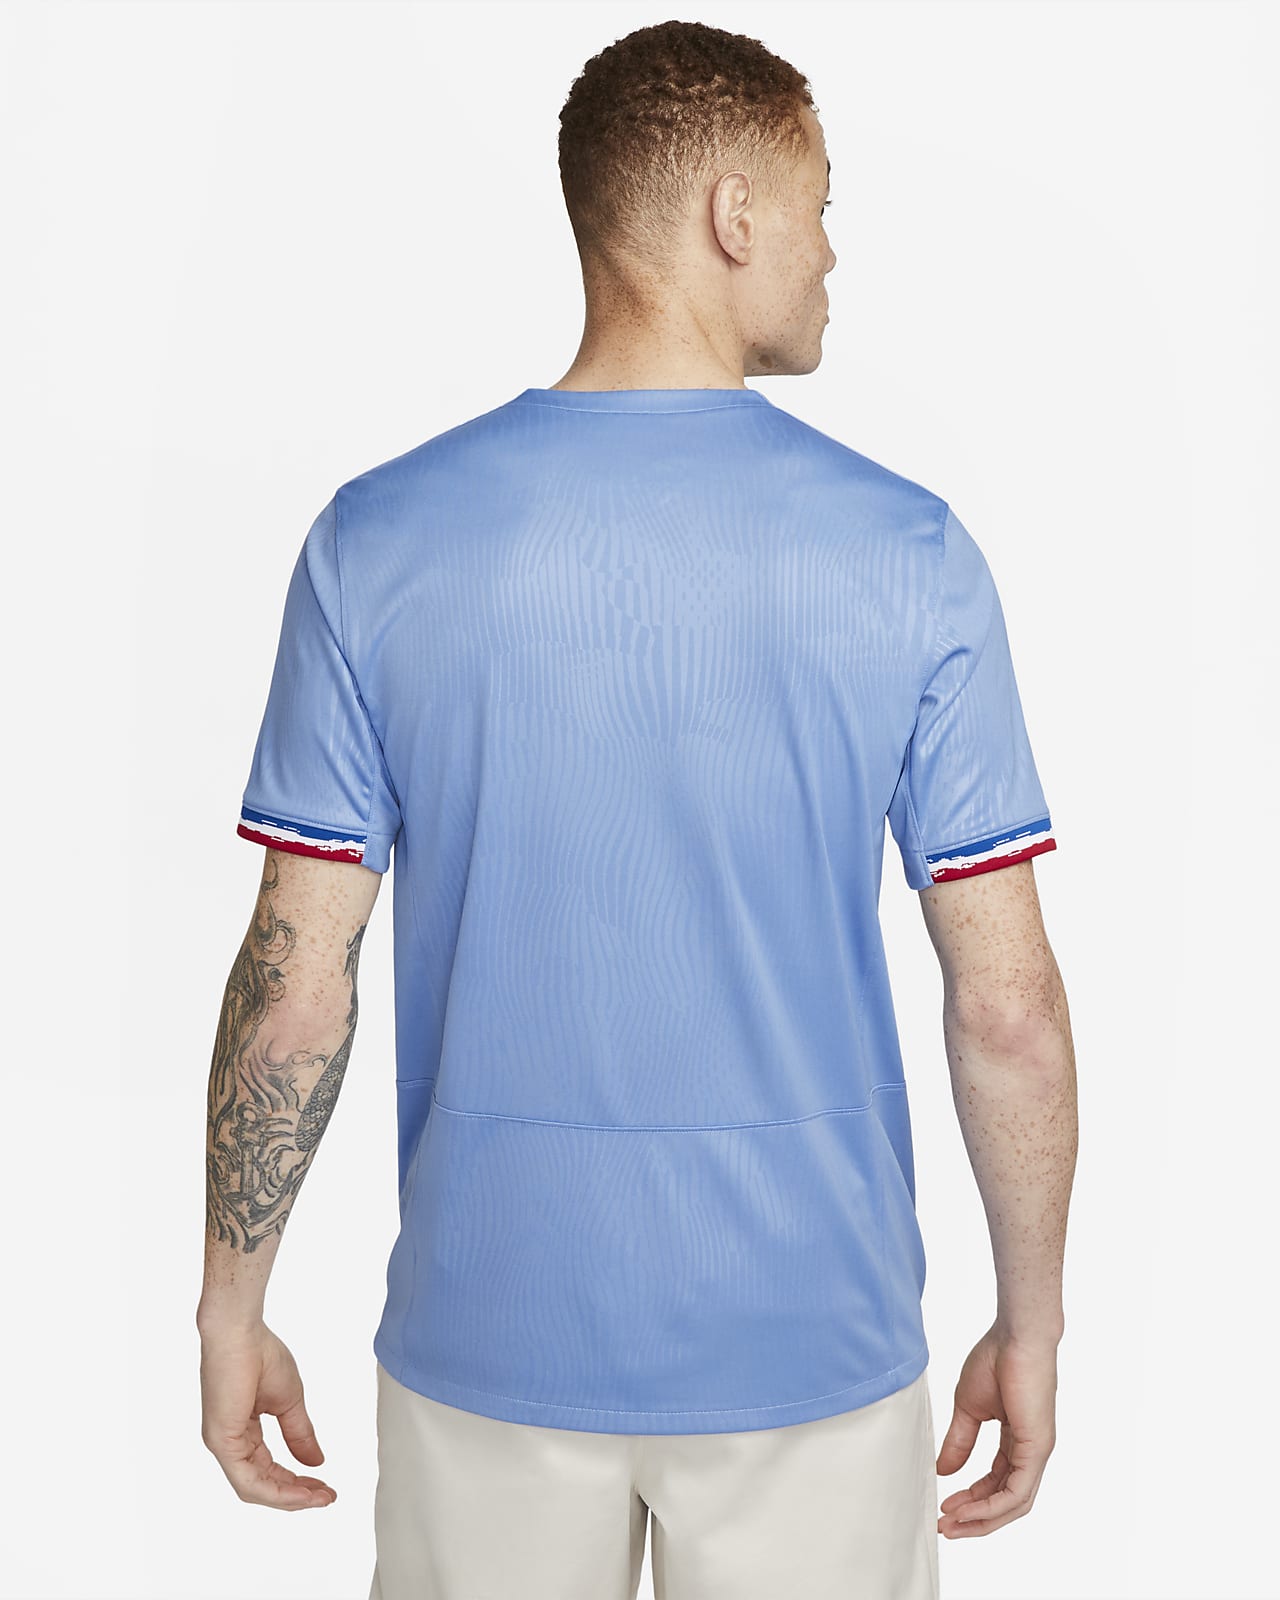 2016-17 Nike France Polo Shirt